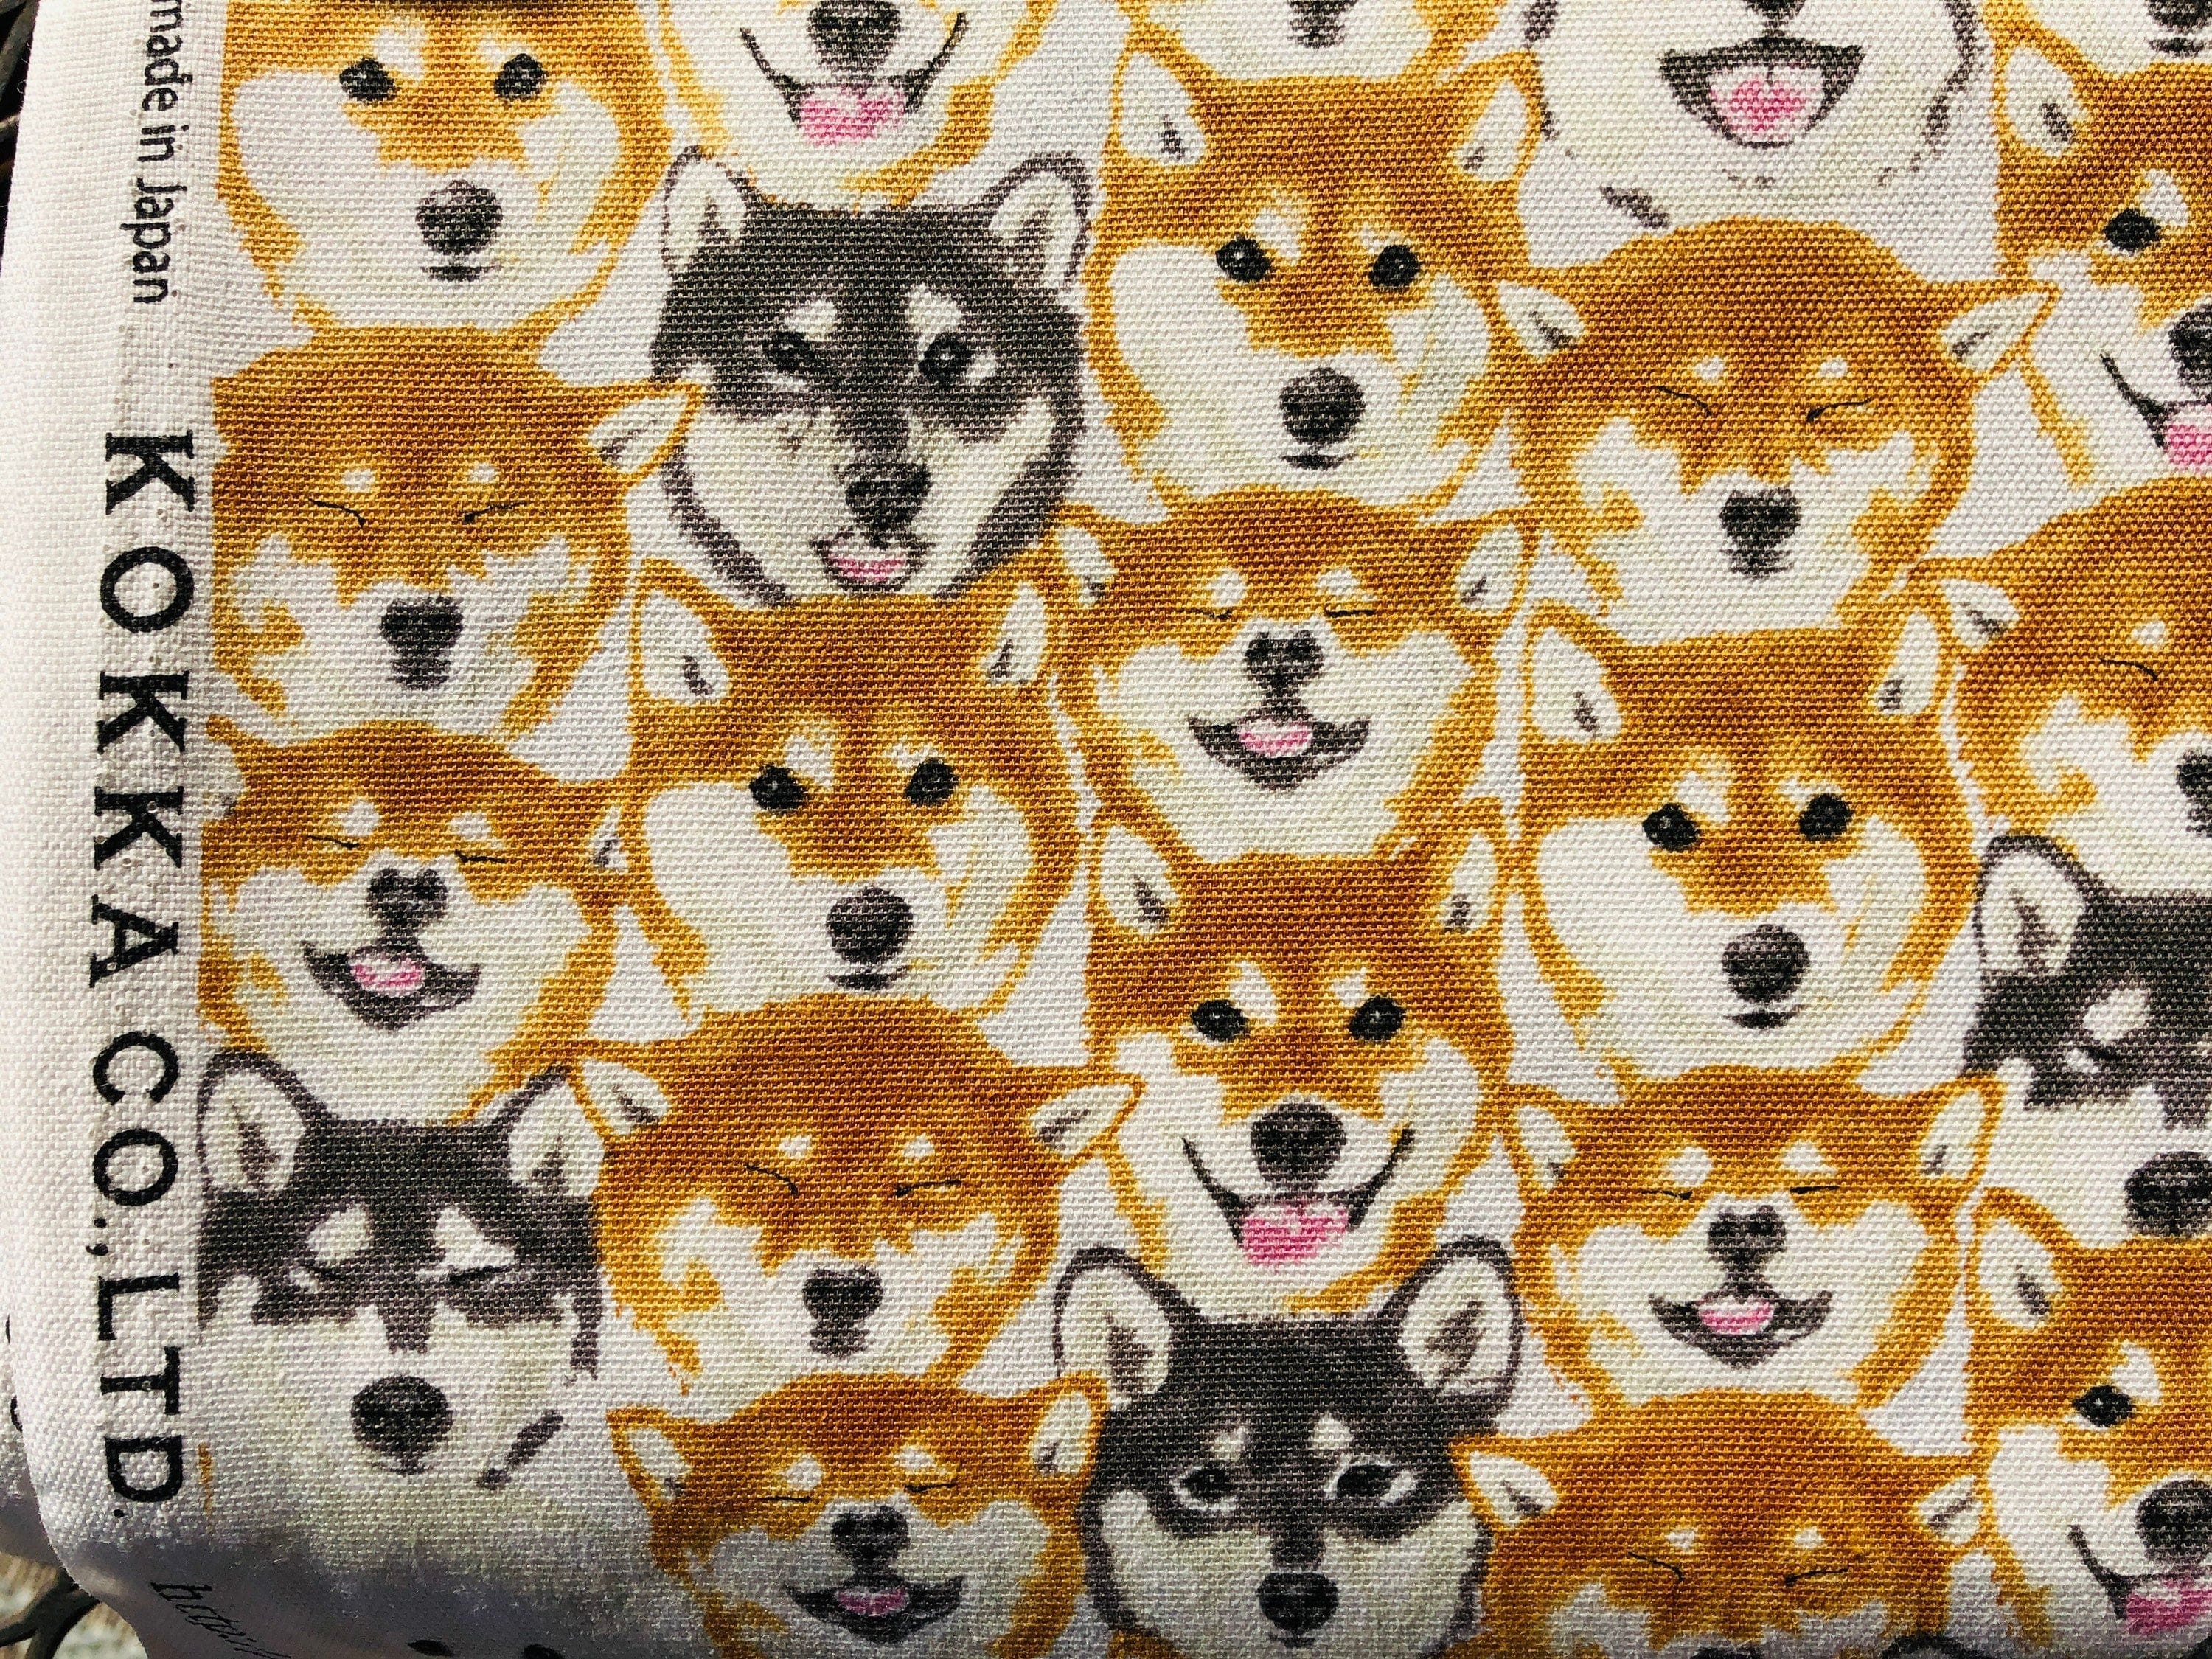 Dog - Husky - Husky Dog - Japanese Fabric - Kokka - Mask Fabric - Quilting Cotton Fabric - Black - Brown - White - YK-76070